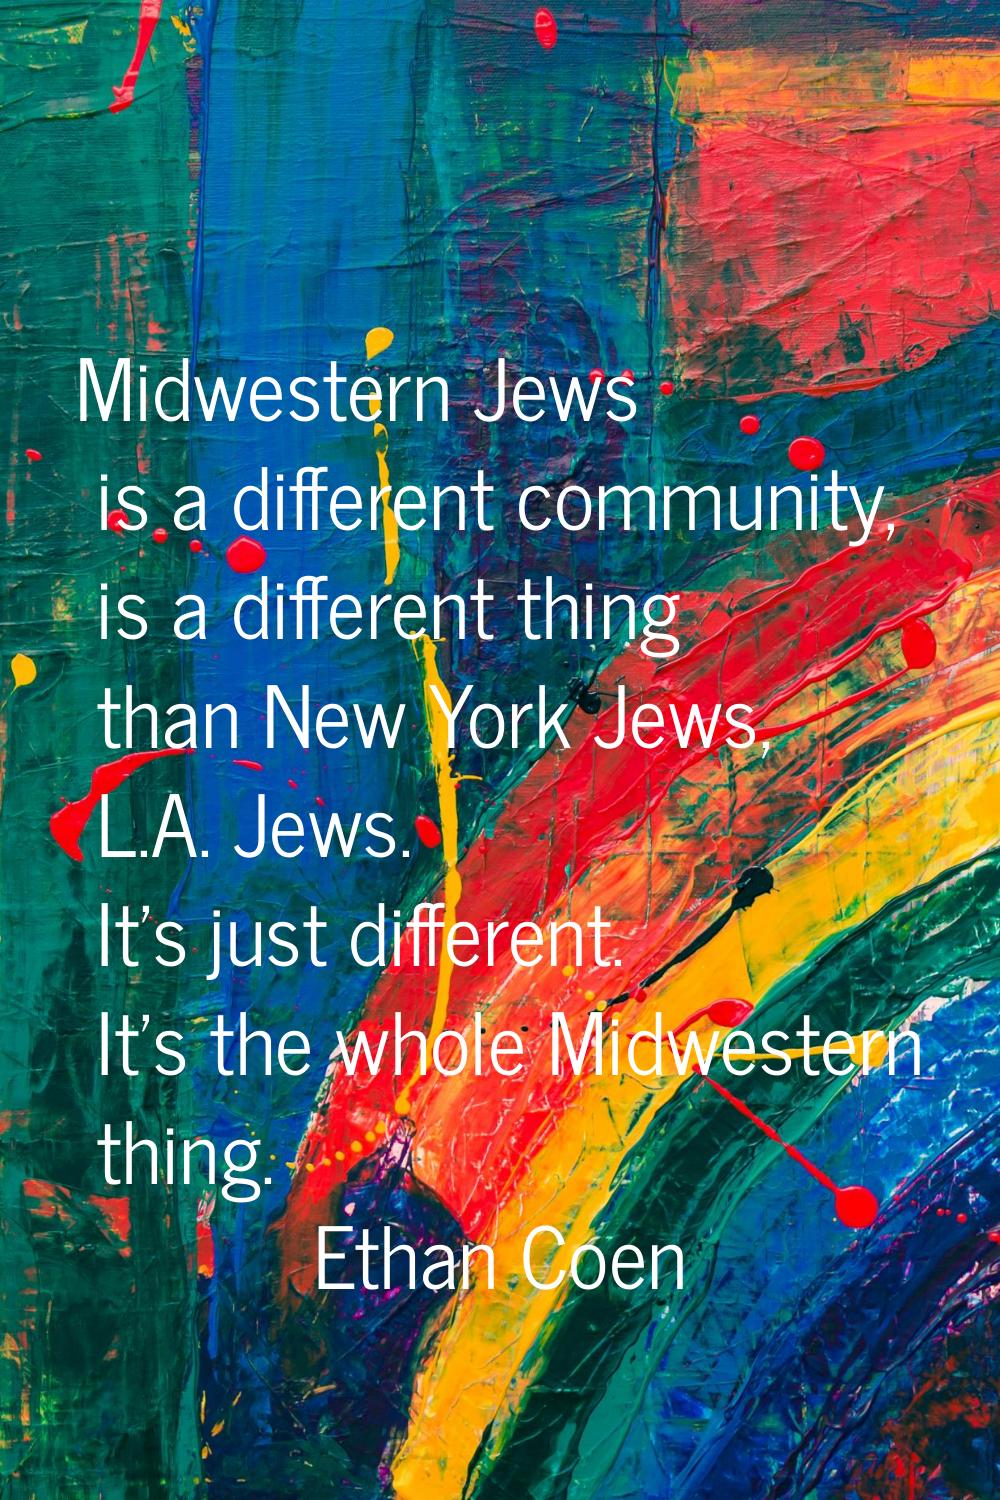 Midwestern Jews is a different community, is a different thing than New York Jews, L.A. Jews. It's 